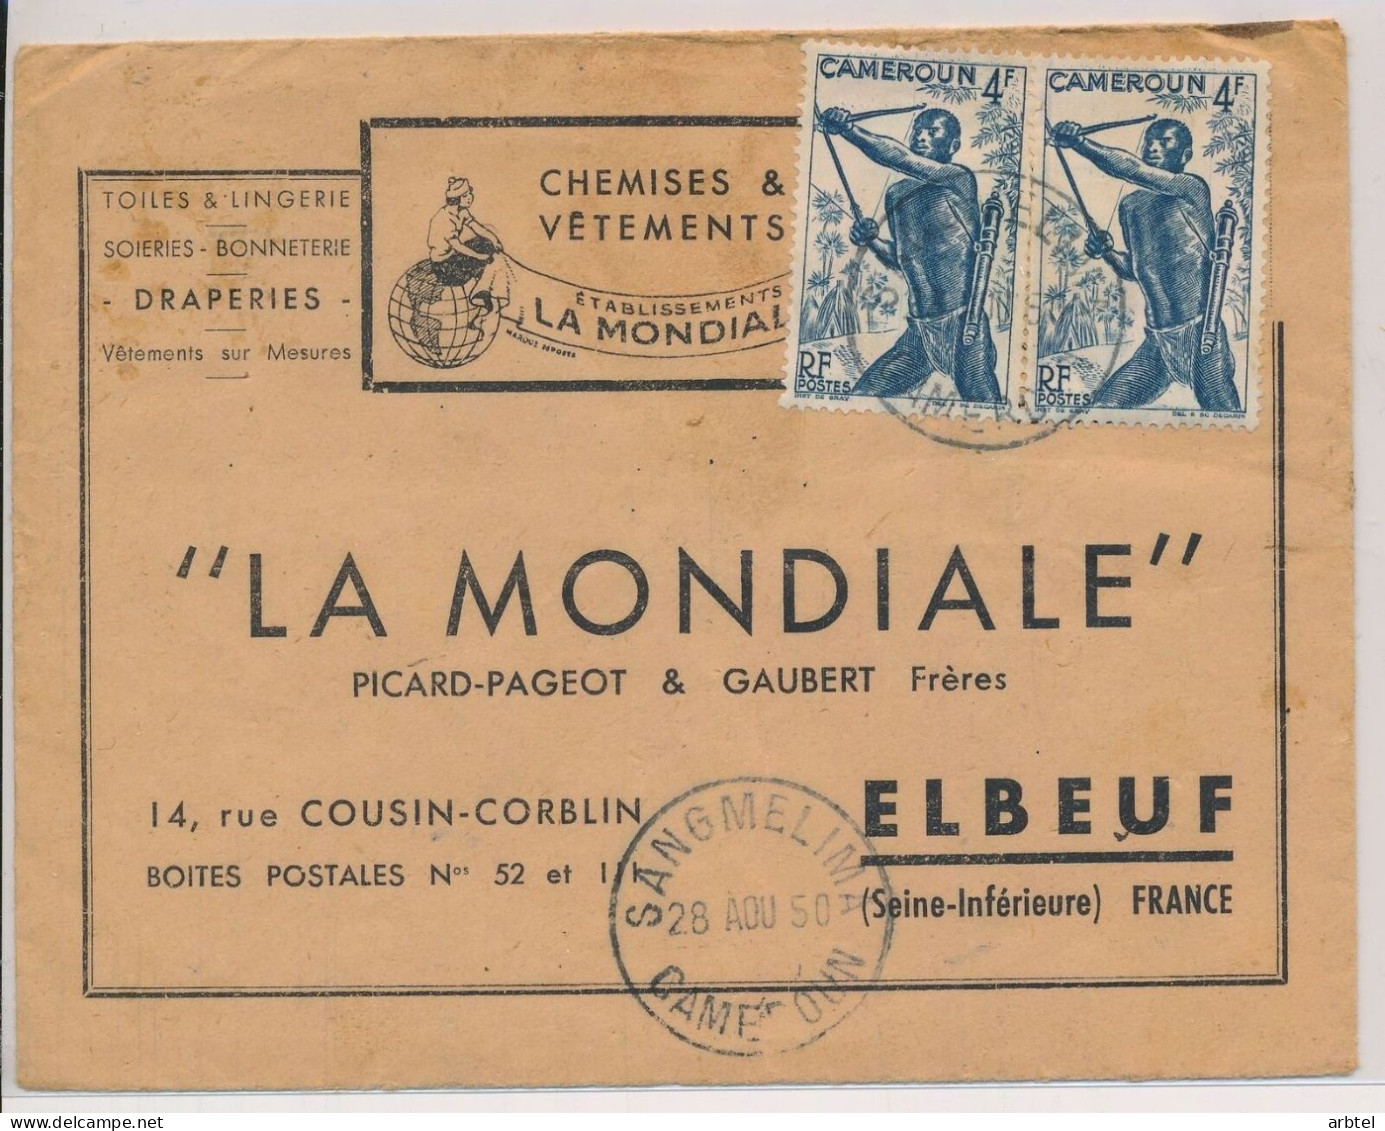 CAMEROUN A ELBEUF 1950 SELLO TIRO ARCO ARCHERY CAZA HUNTING - Bogenschiessen